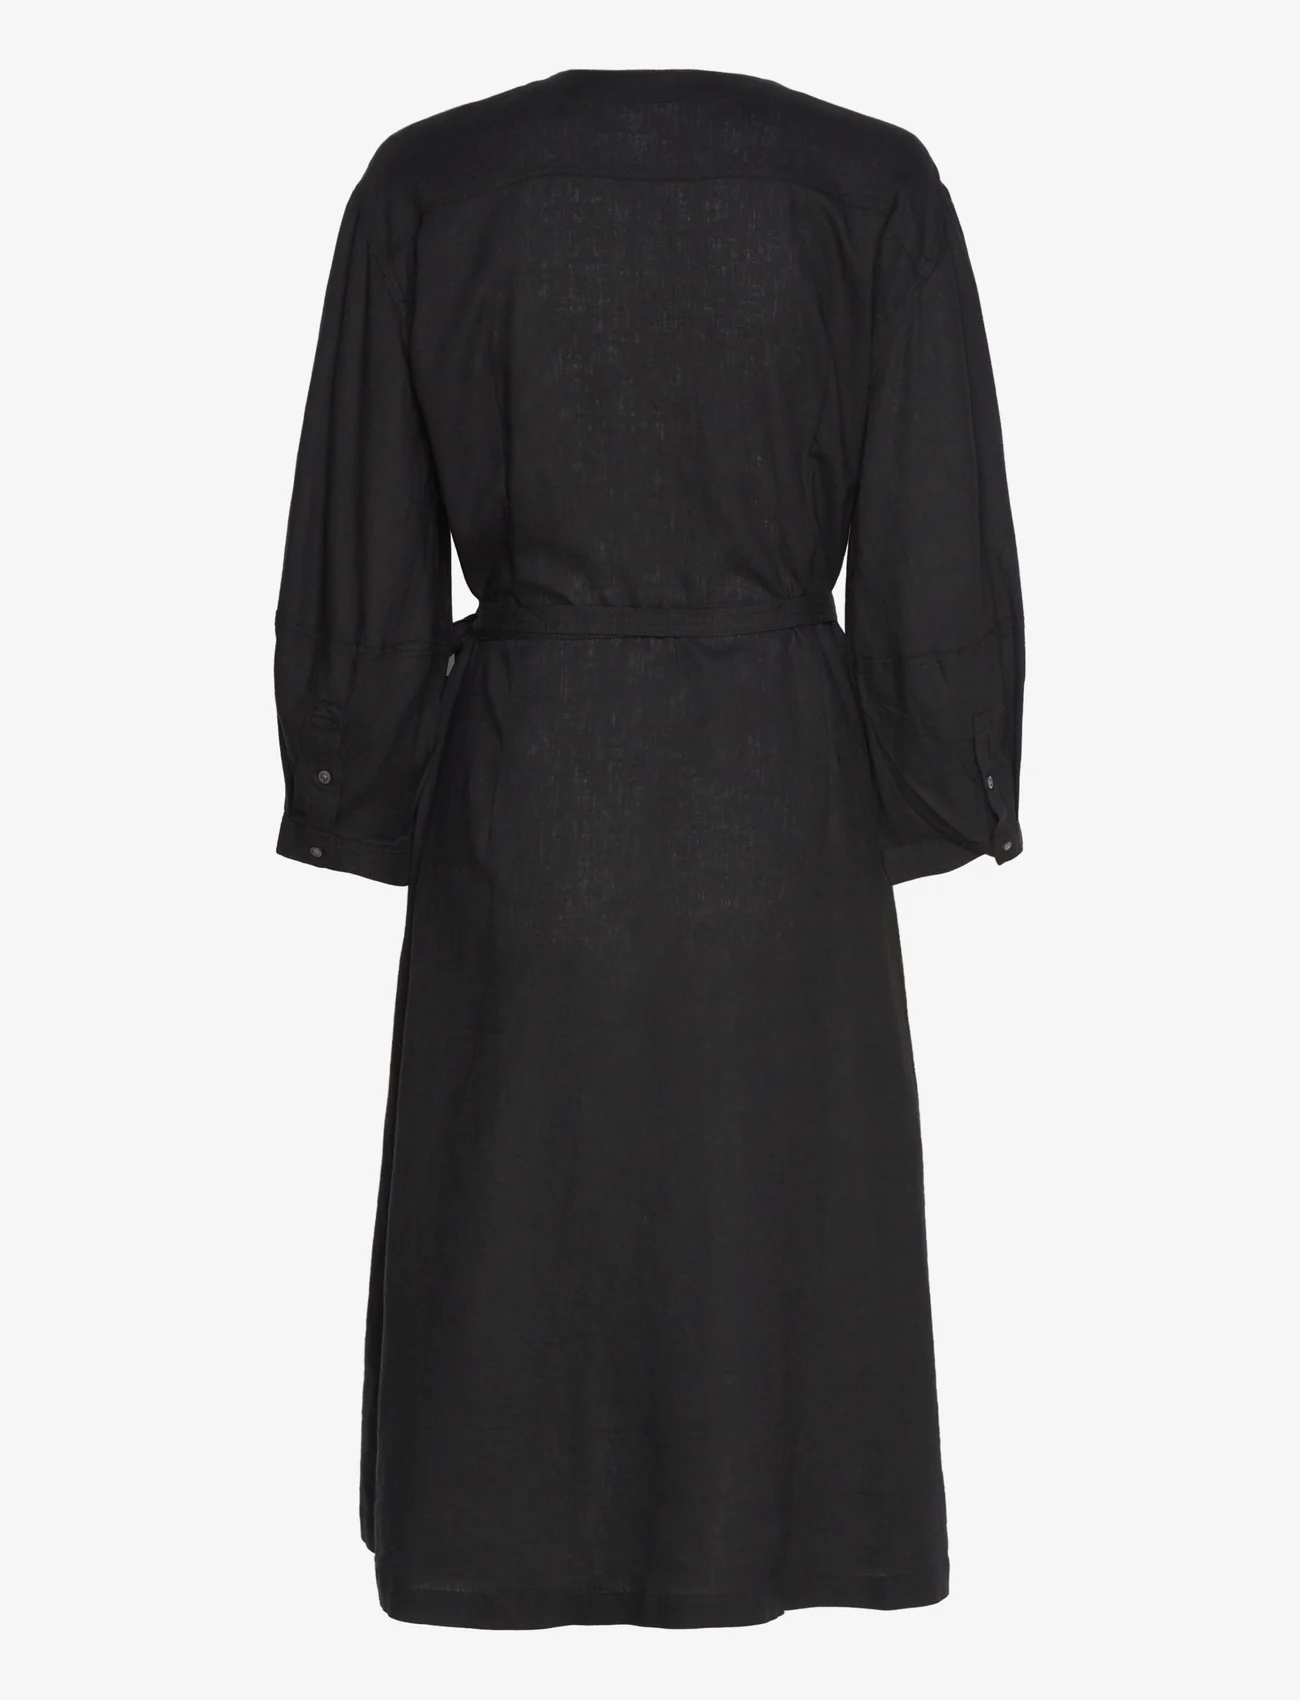 InWear - AmosIW Dress - wrap dresses - black - 1